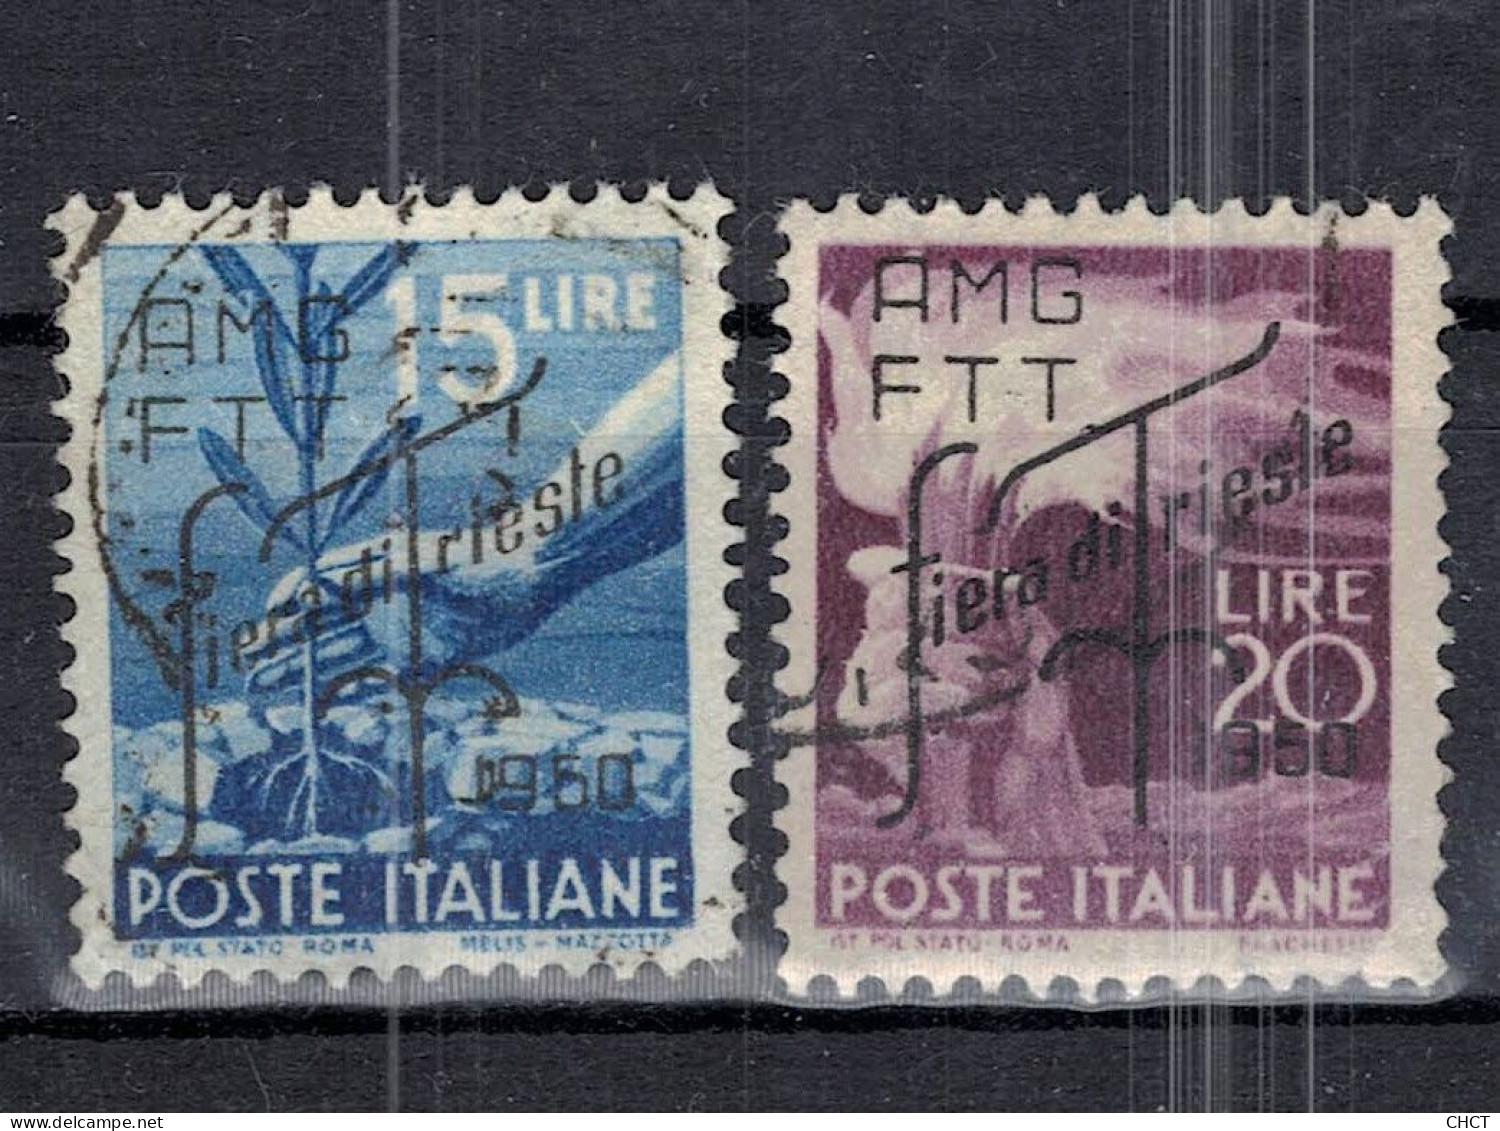 CHCT74 - Motives, AMG-FTT Overprint, Trieste A, 1950, Complete Series, Italy - Gebraucht